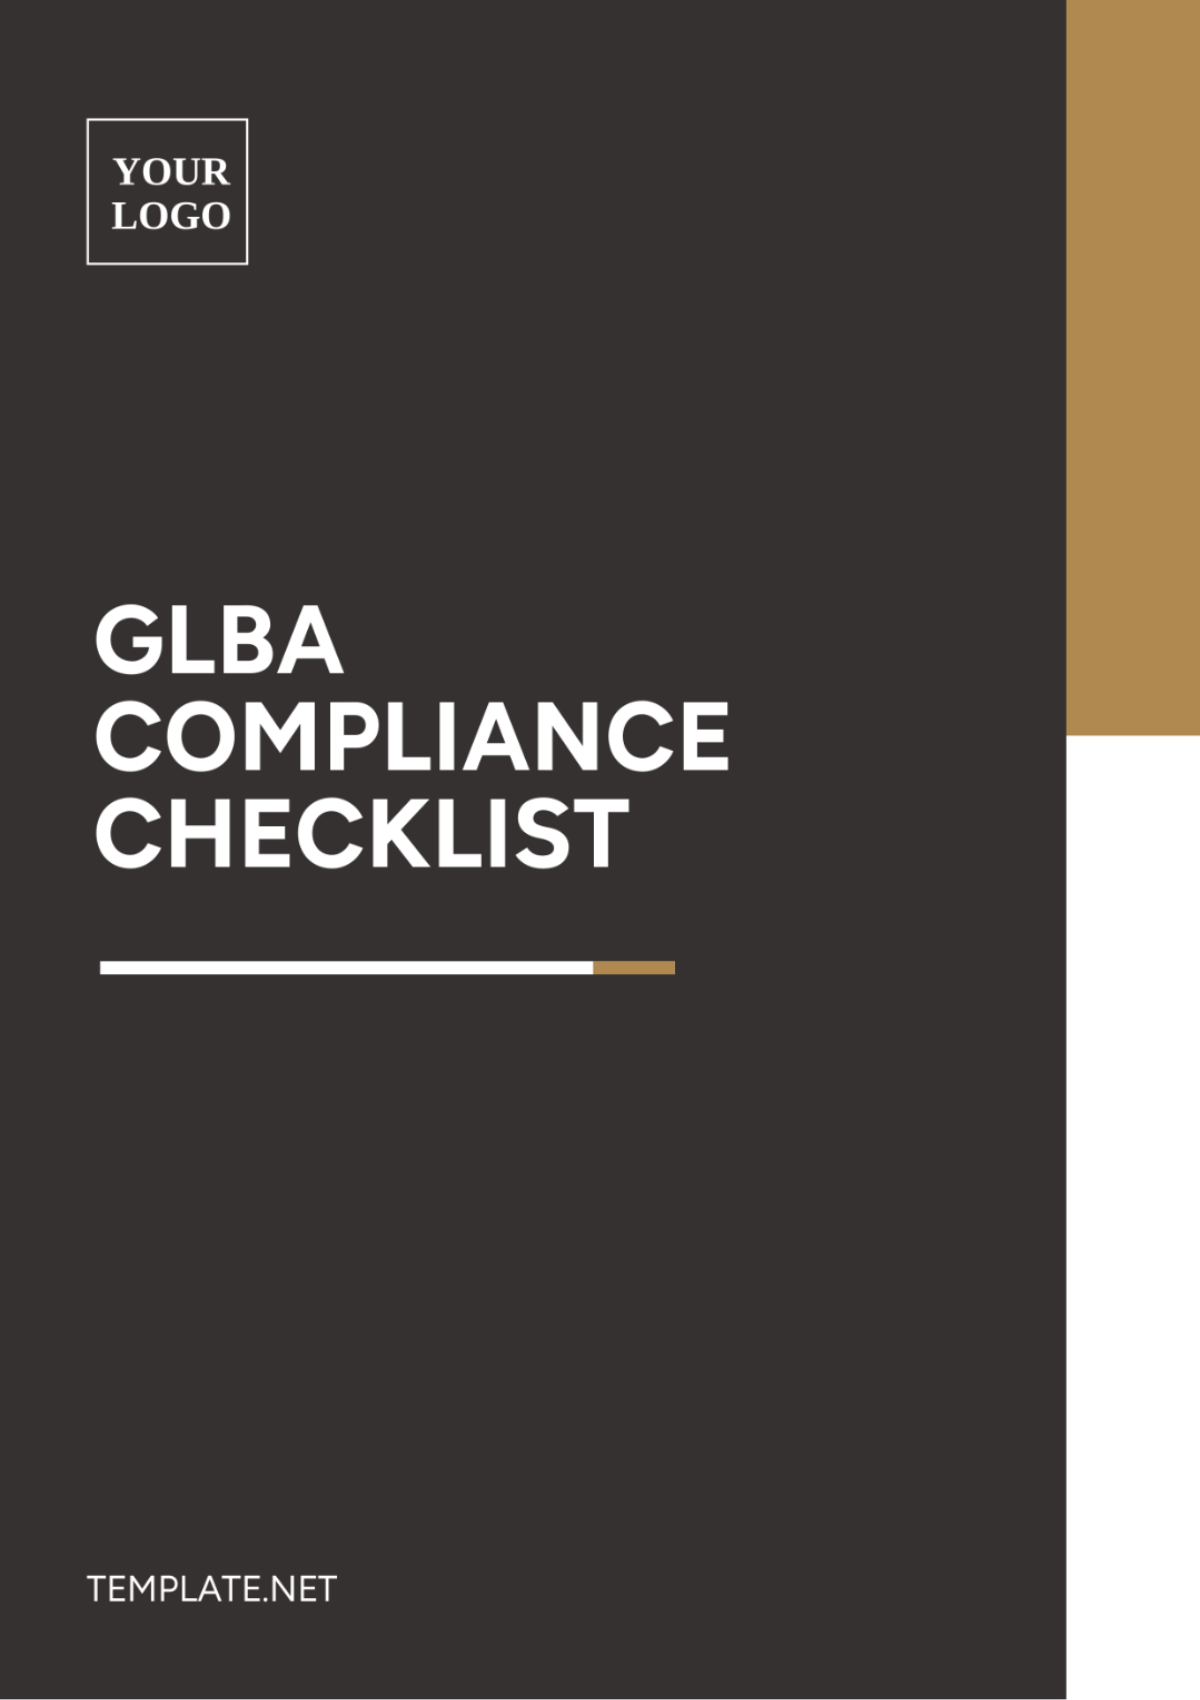 GLBA Compliance Checklist Template